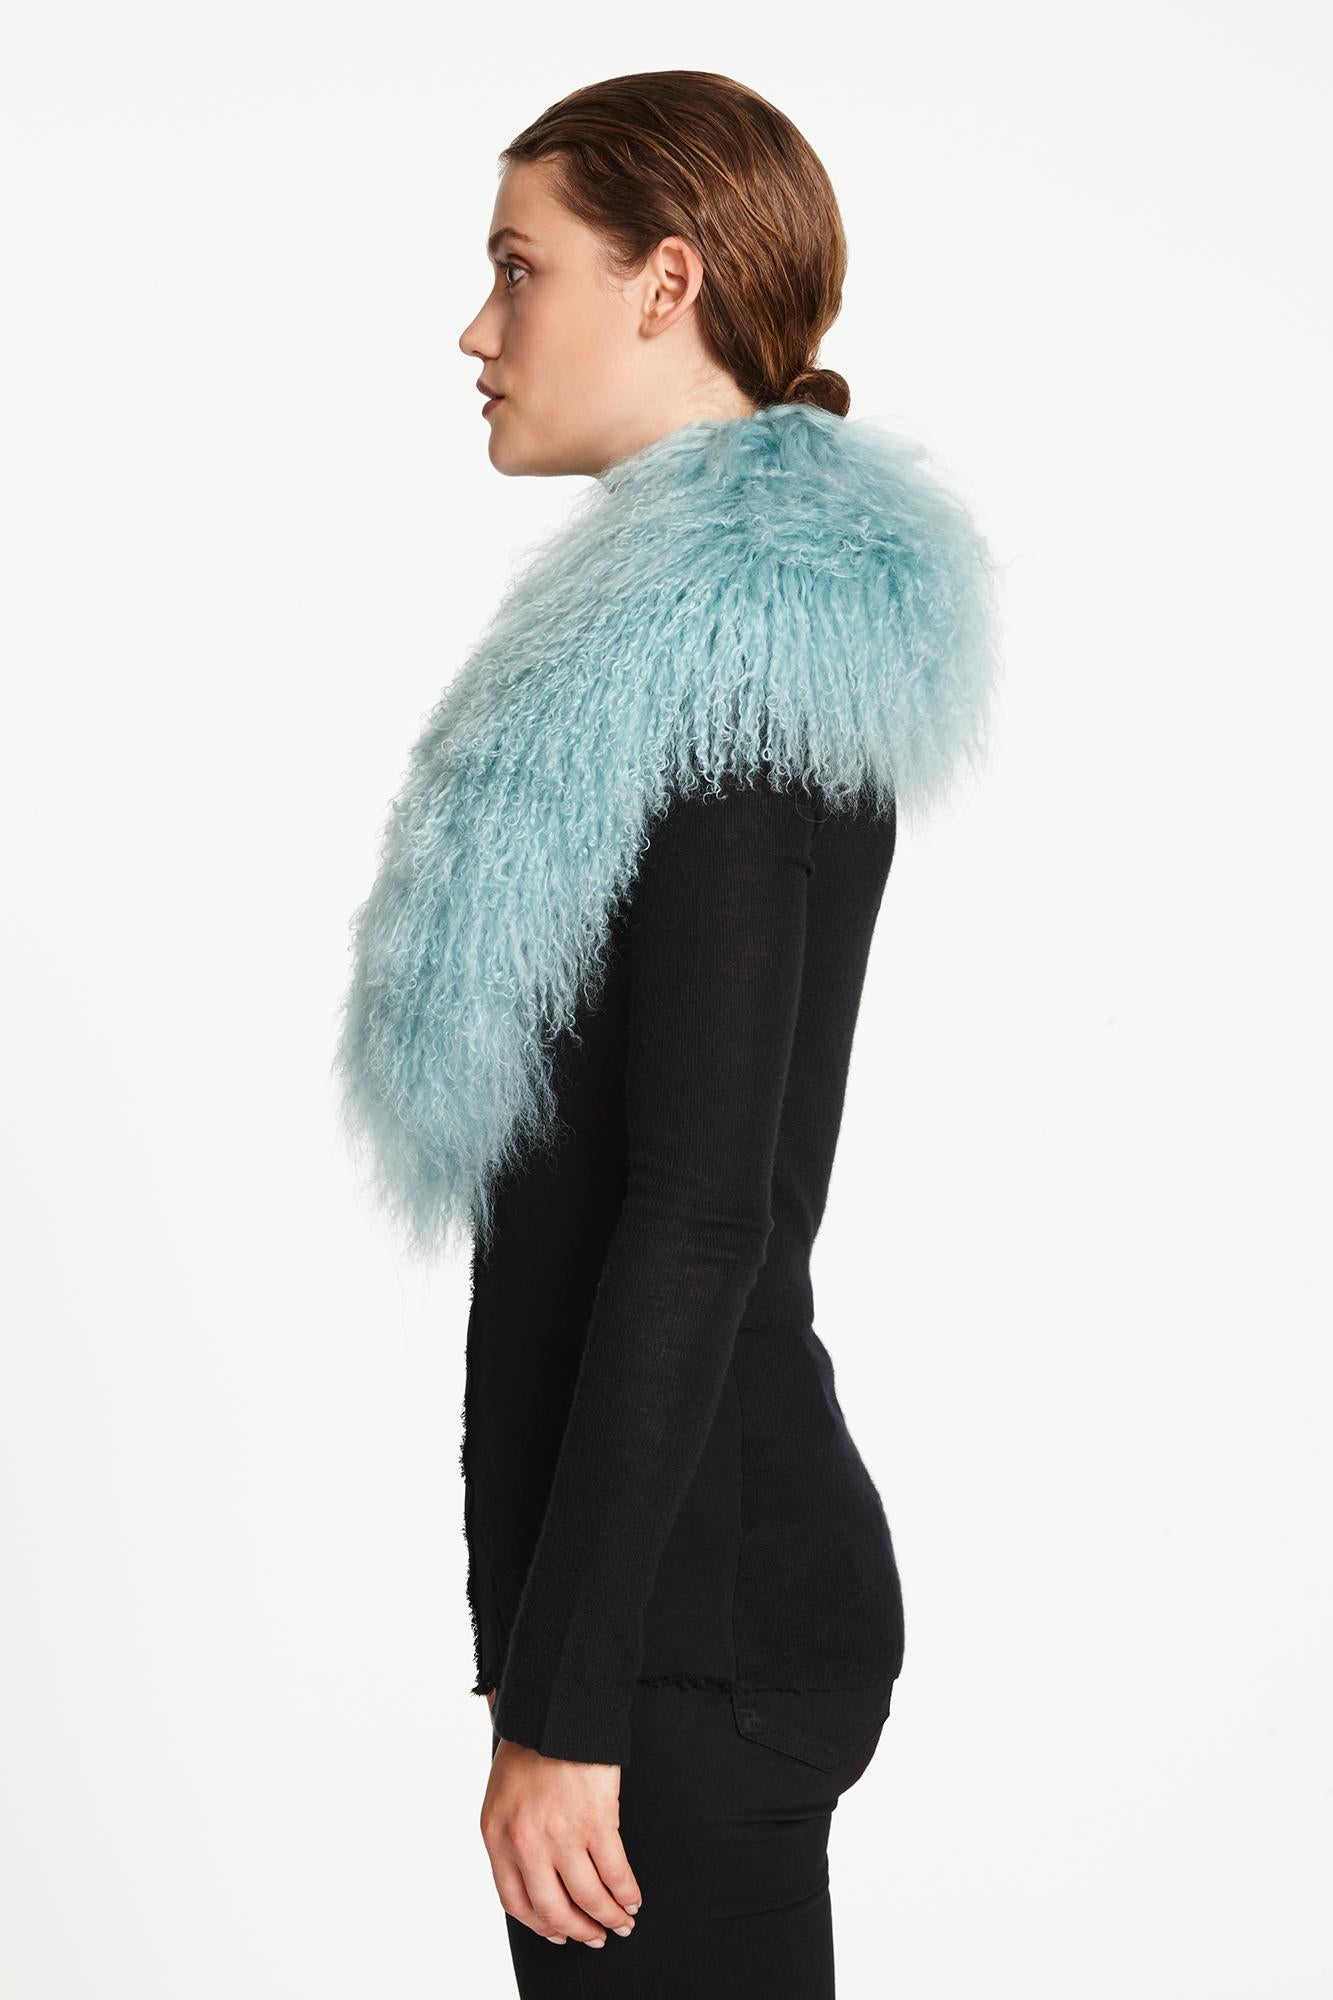 Verheyen London Shawl Collar in Aquamarine Blue Mongolian Lamb Fur  - Brand New  1